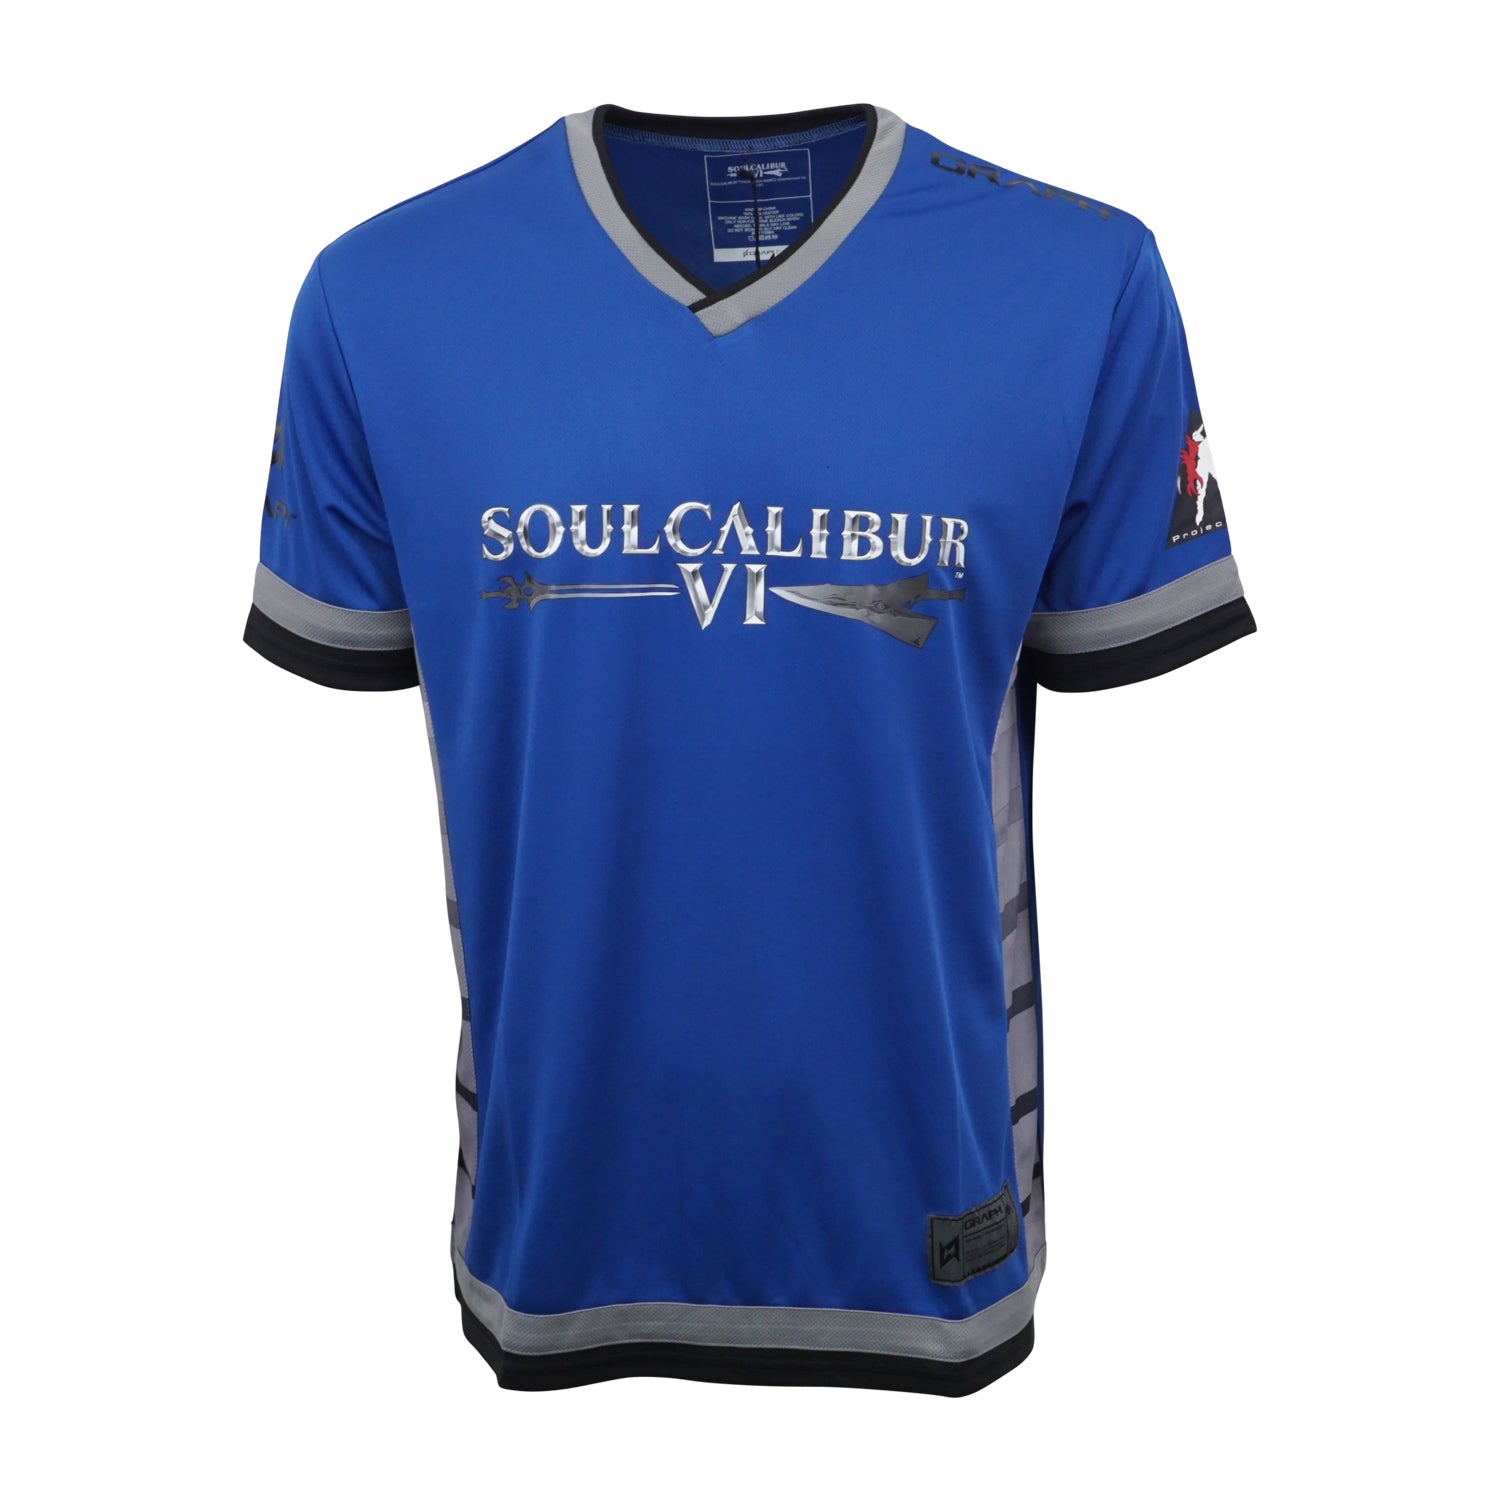 Soulcalibur VI Graph Jersey